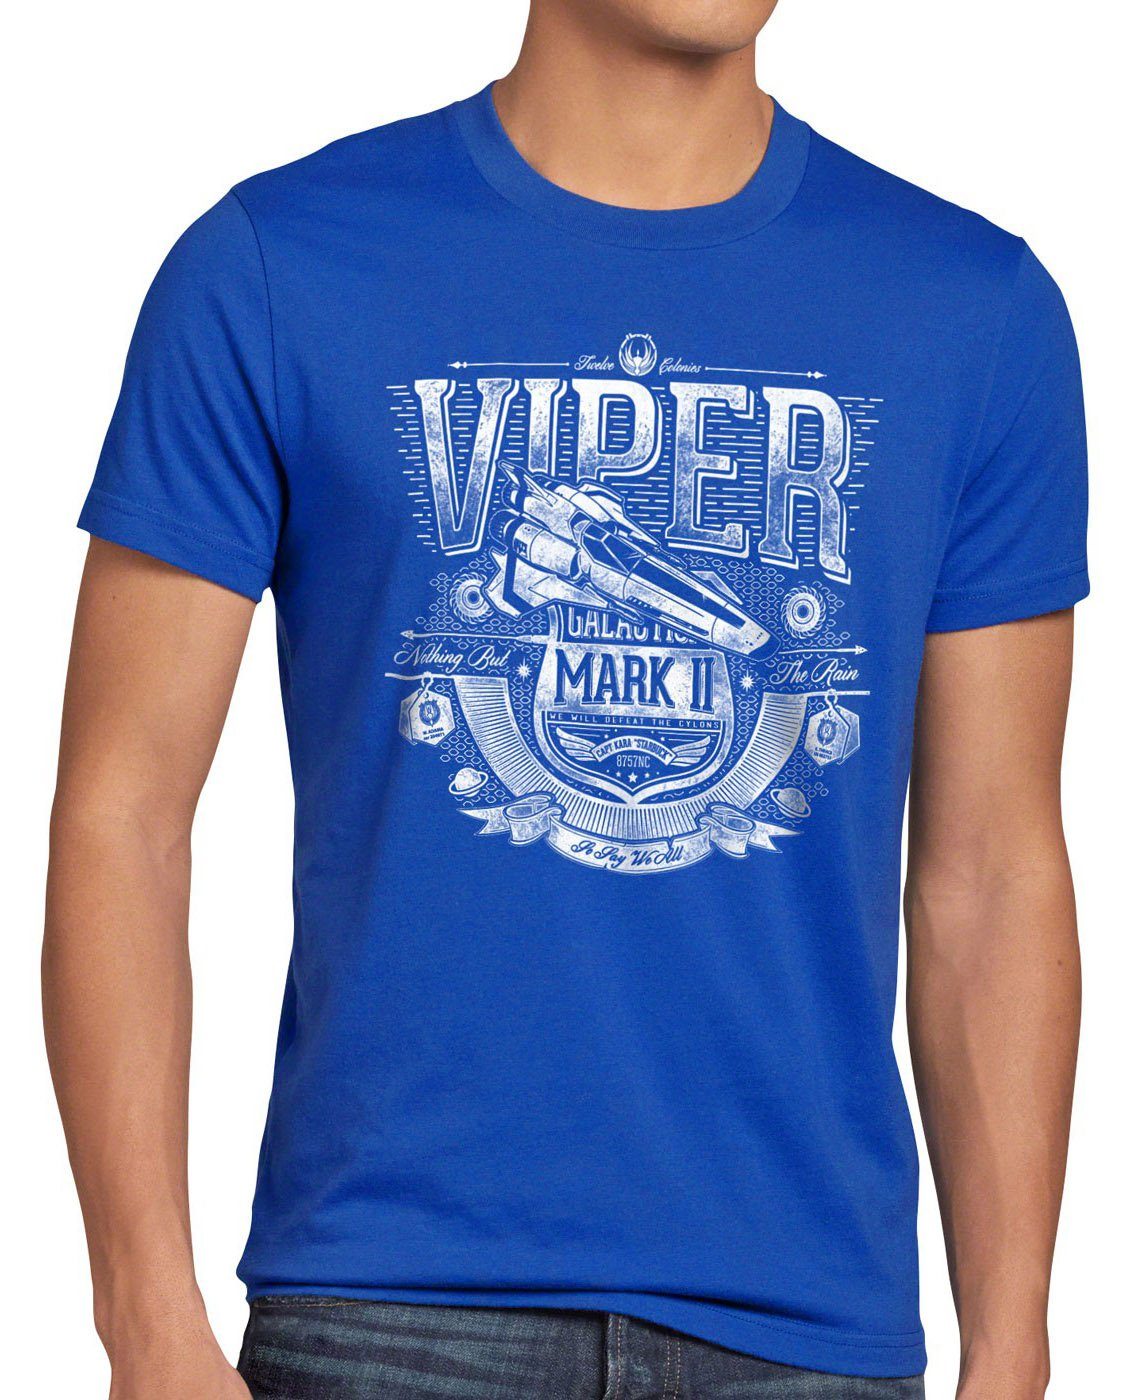 Print-Shirt battlestar galactica zylon galaktika T-Shirt Herren jäger style3 MK2 Viper kampfstern blau